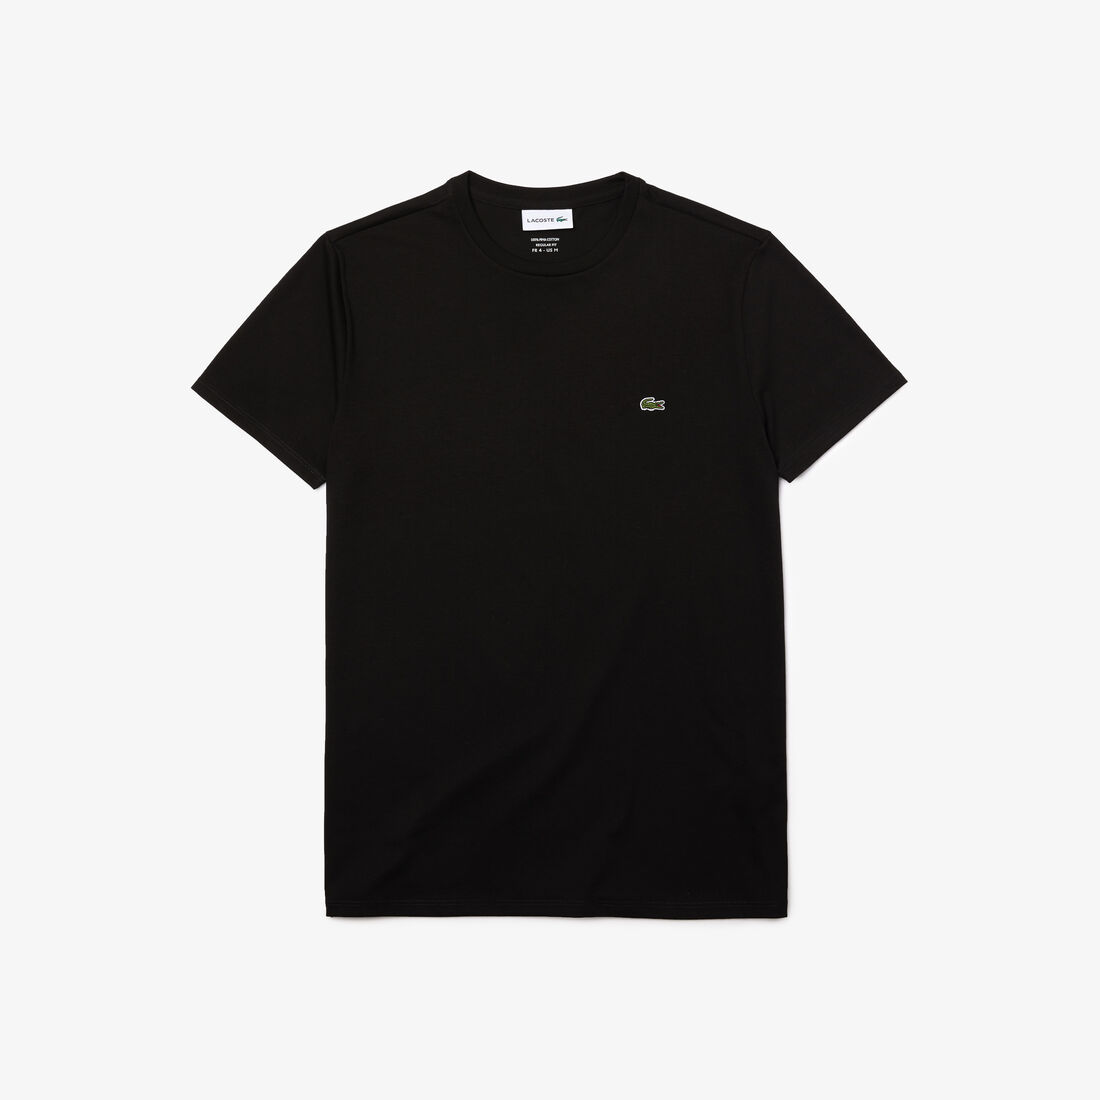 Lacoste - Pima Cotton Jersey T-Shirt, Crew Neck - Black